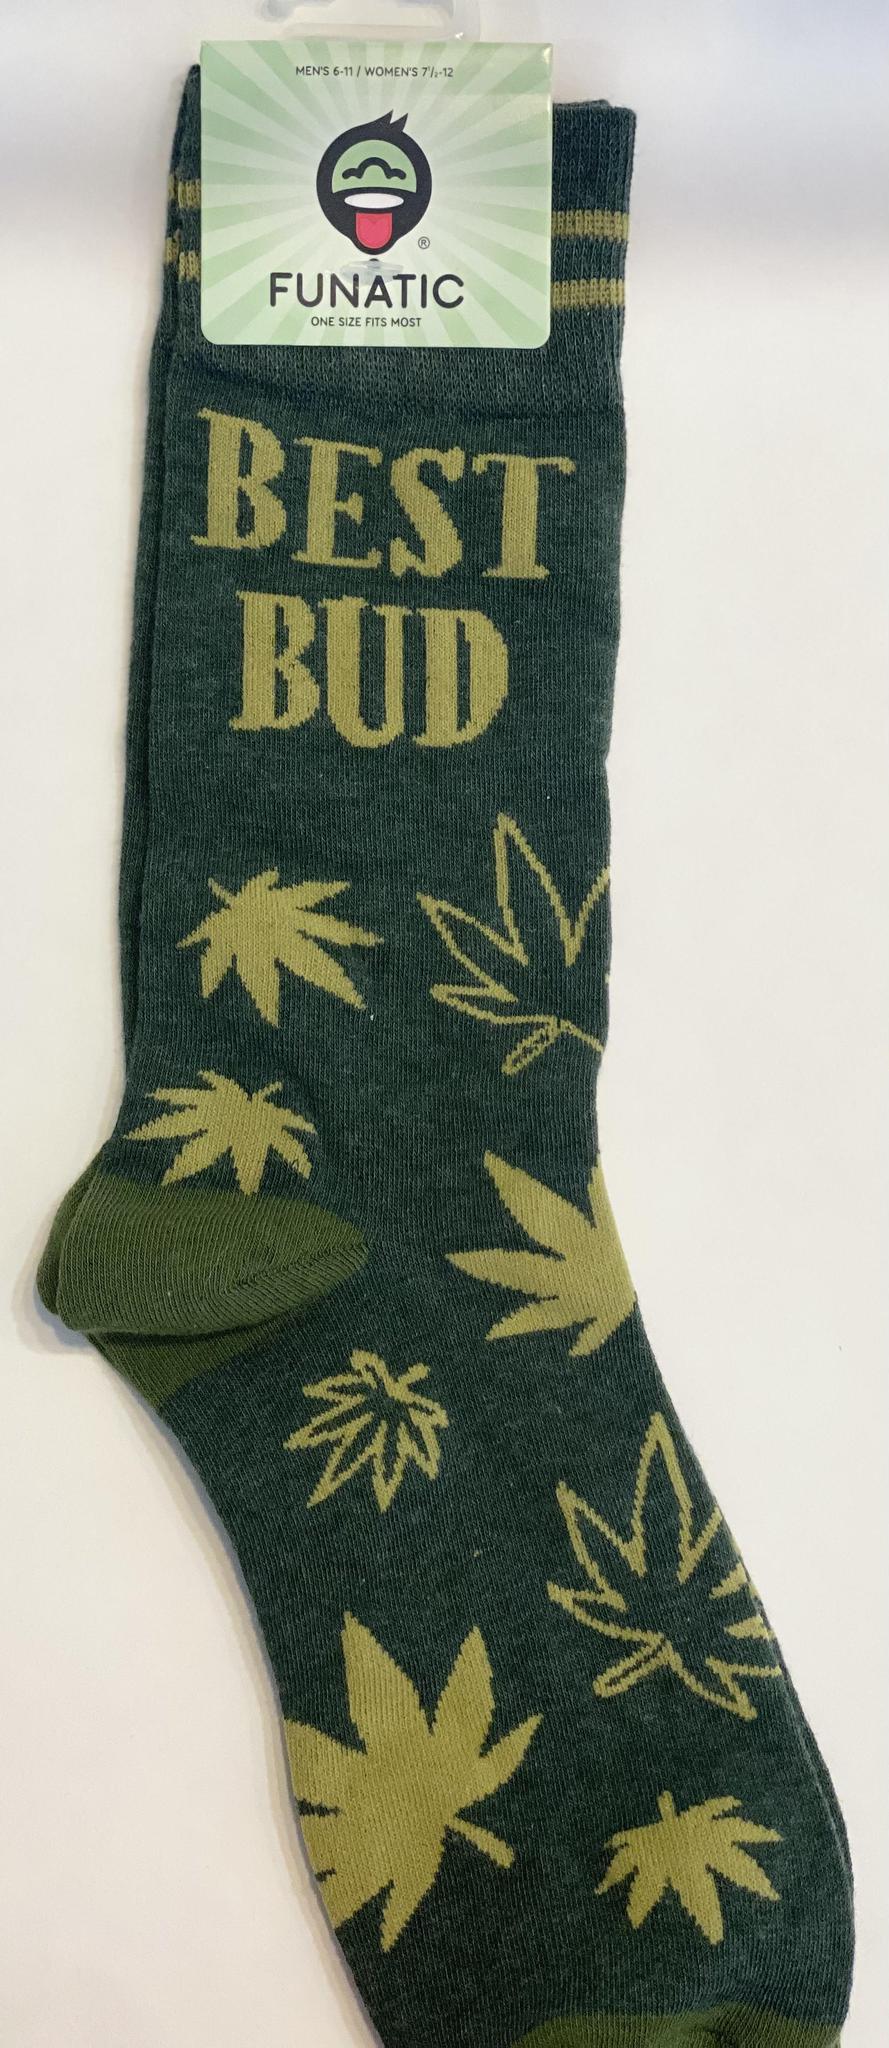 Best Bud Socks